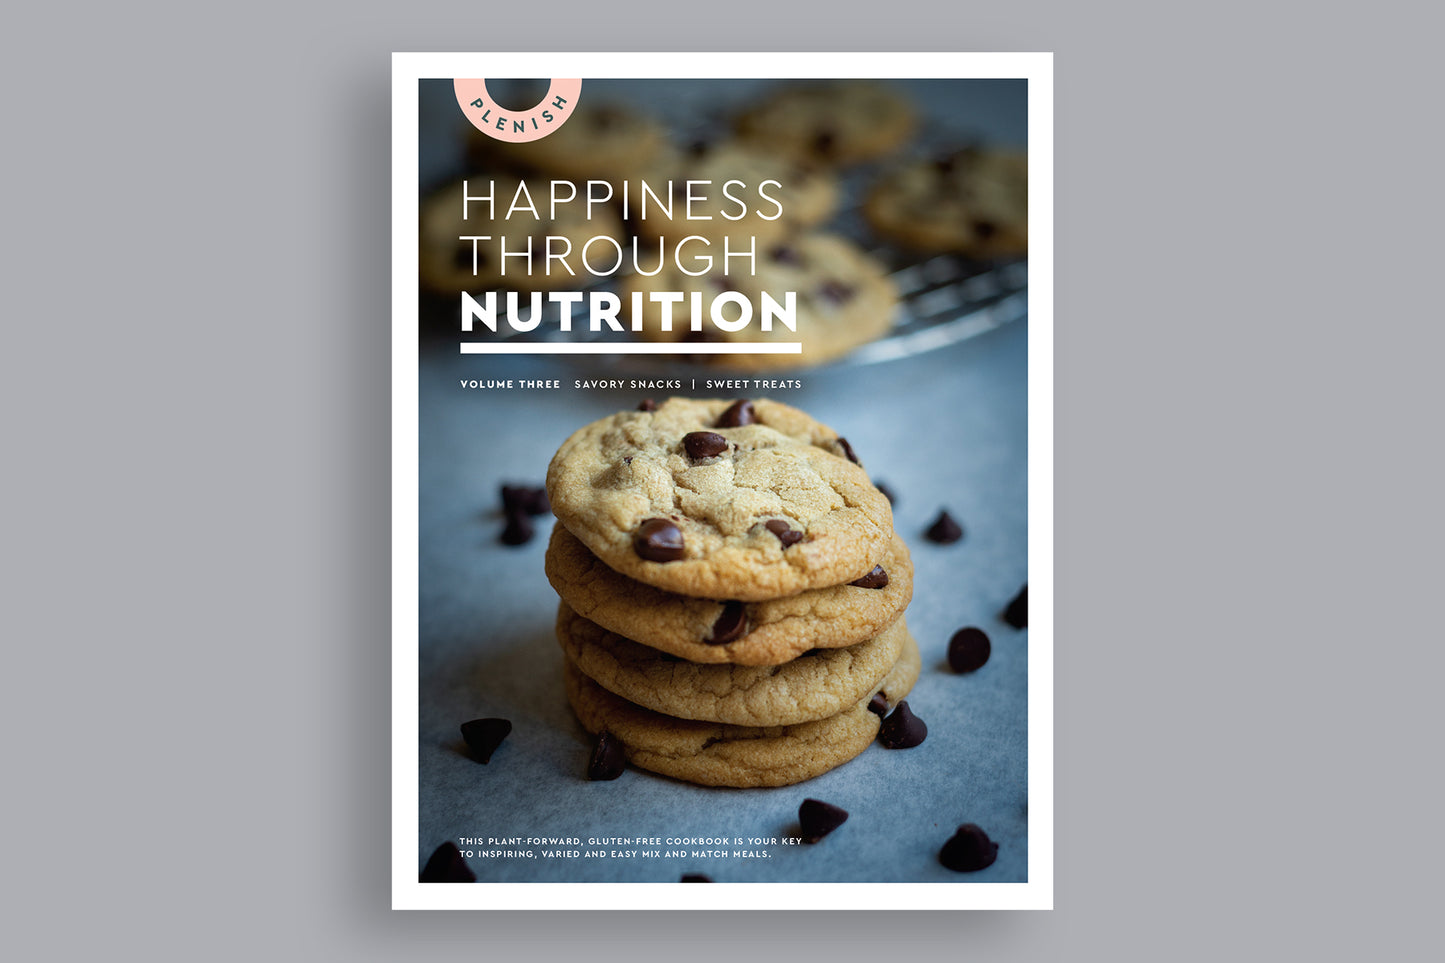 E cookbook - "Happiness through nutrition" Volume 3 - Savory Snacks & Sweet Treats